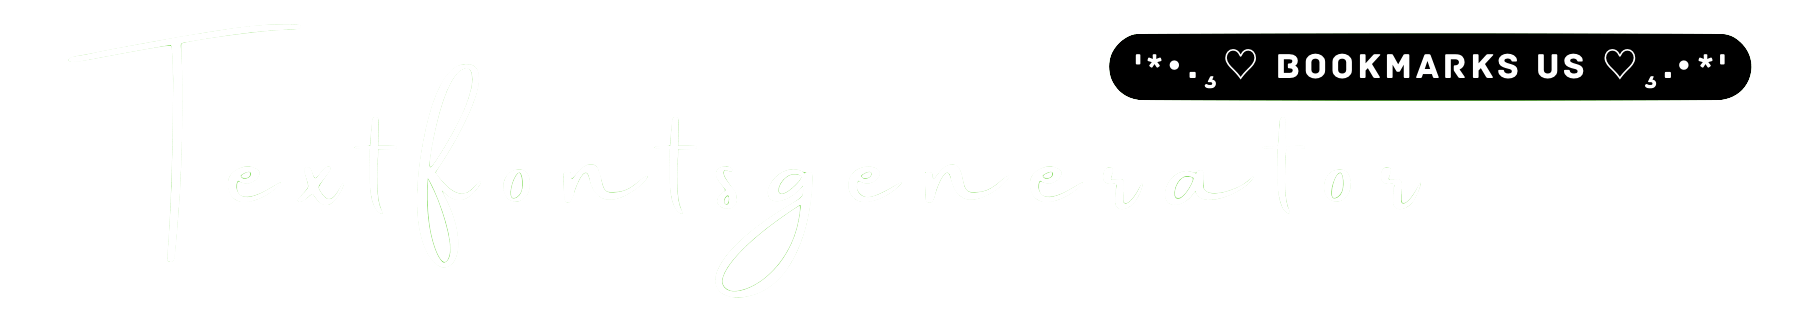 Stylish Text Generator ➜ #1 😍 𝕊𝕥𝕪𝕝𝕚𝕤𝕙 Text Fonts ✓